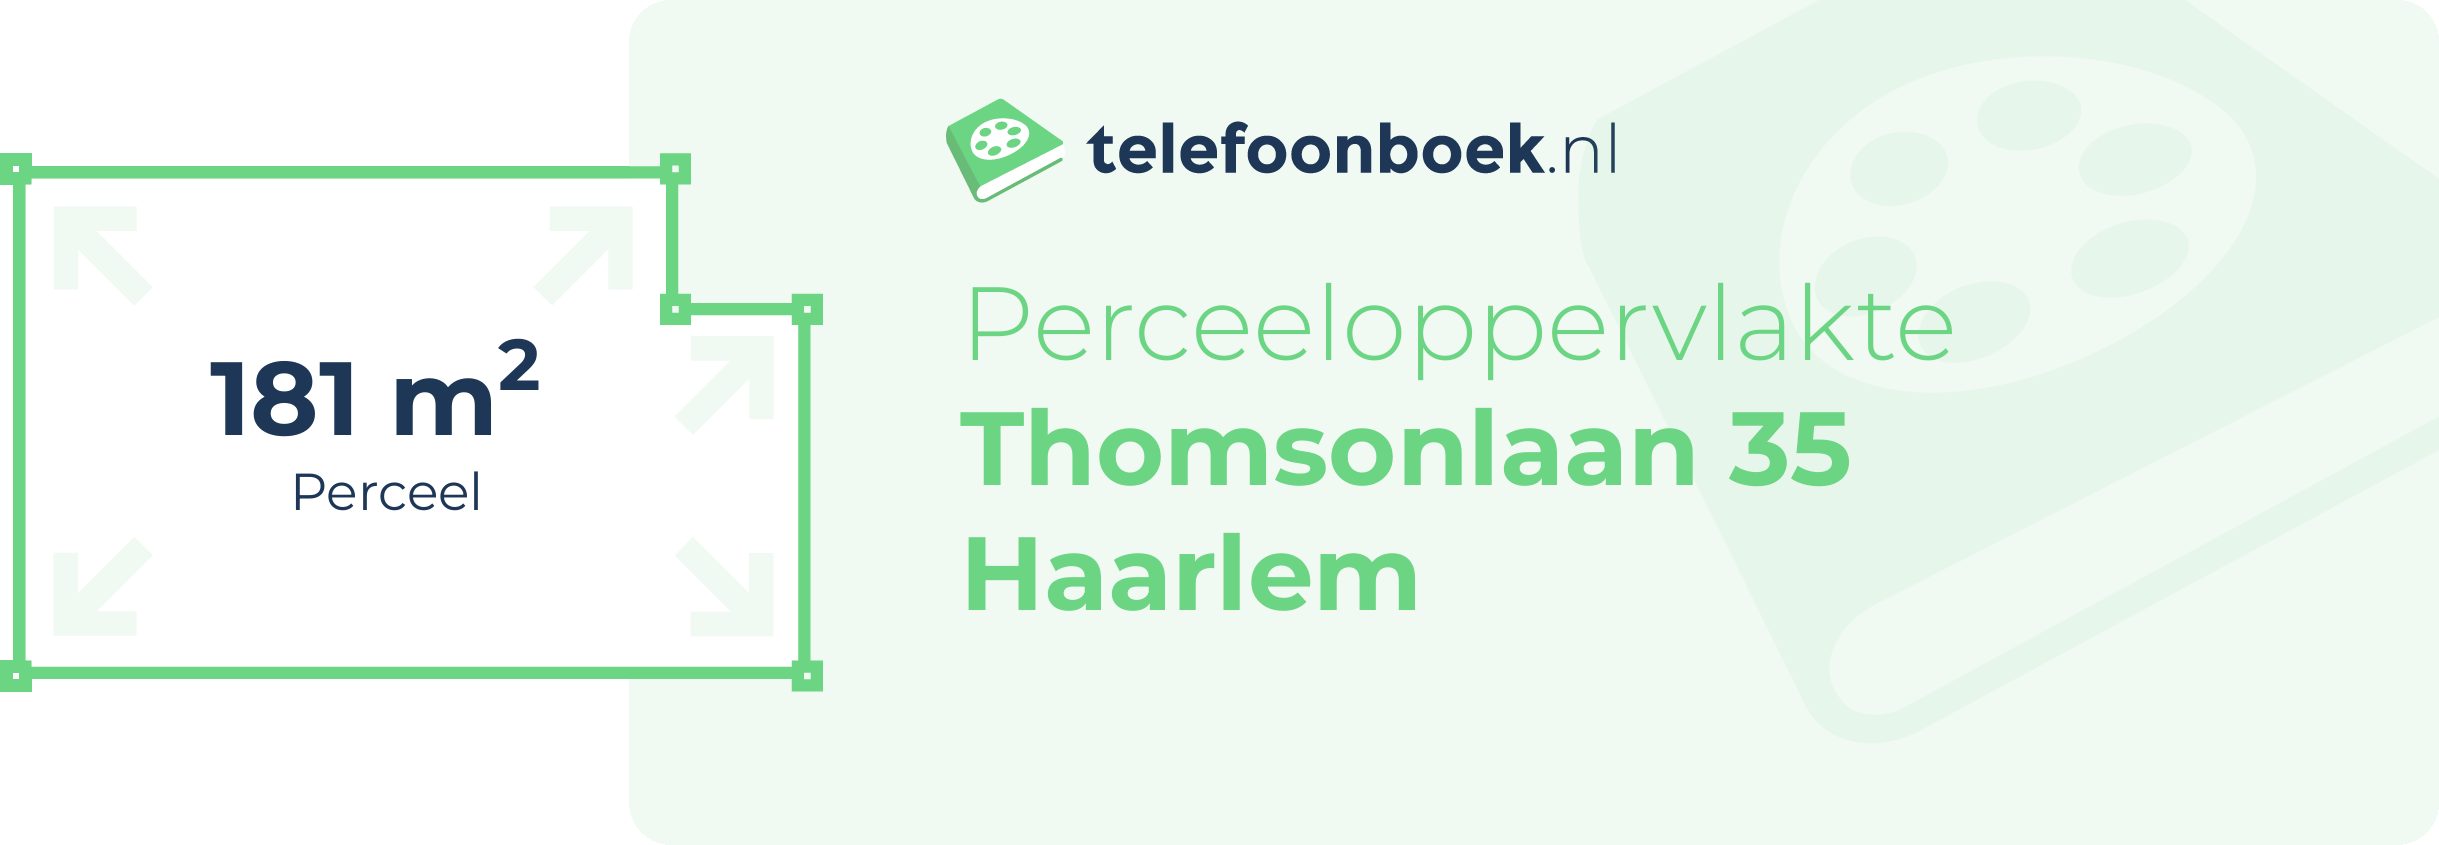 Perceeloppervlakte Thomsonlaan 35 Haarlem